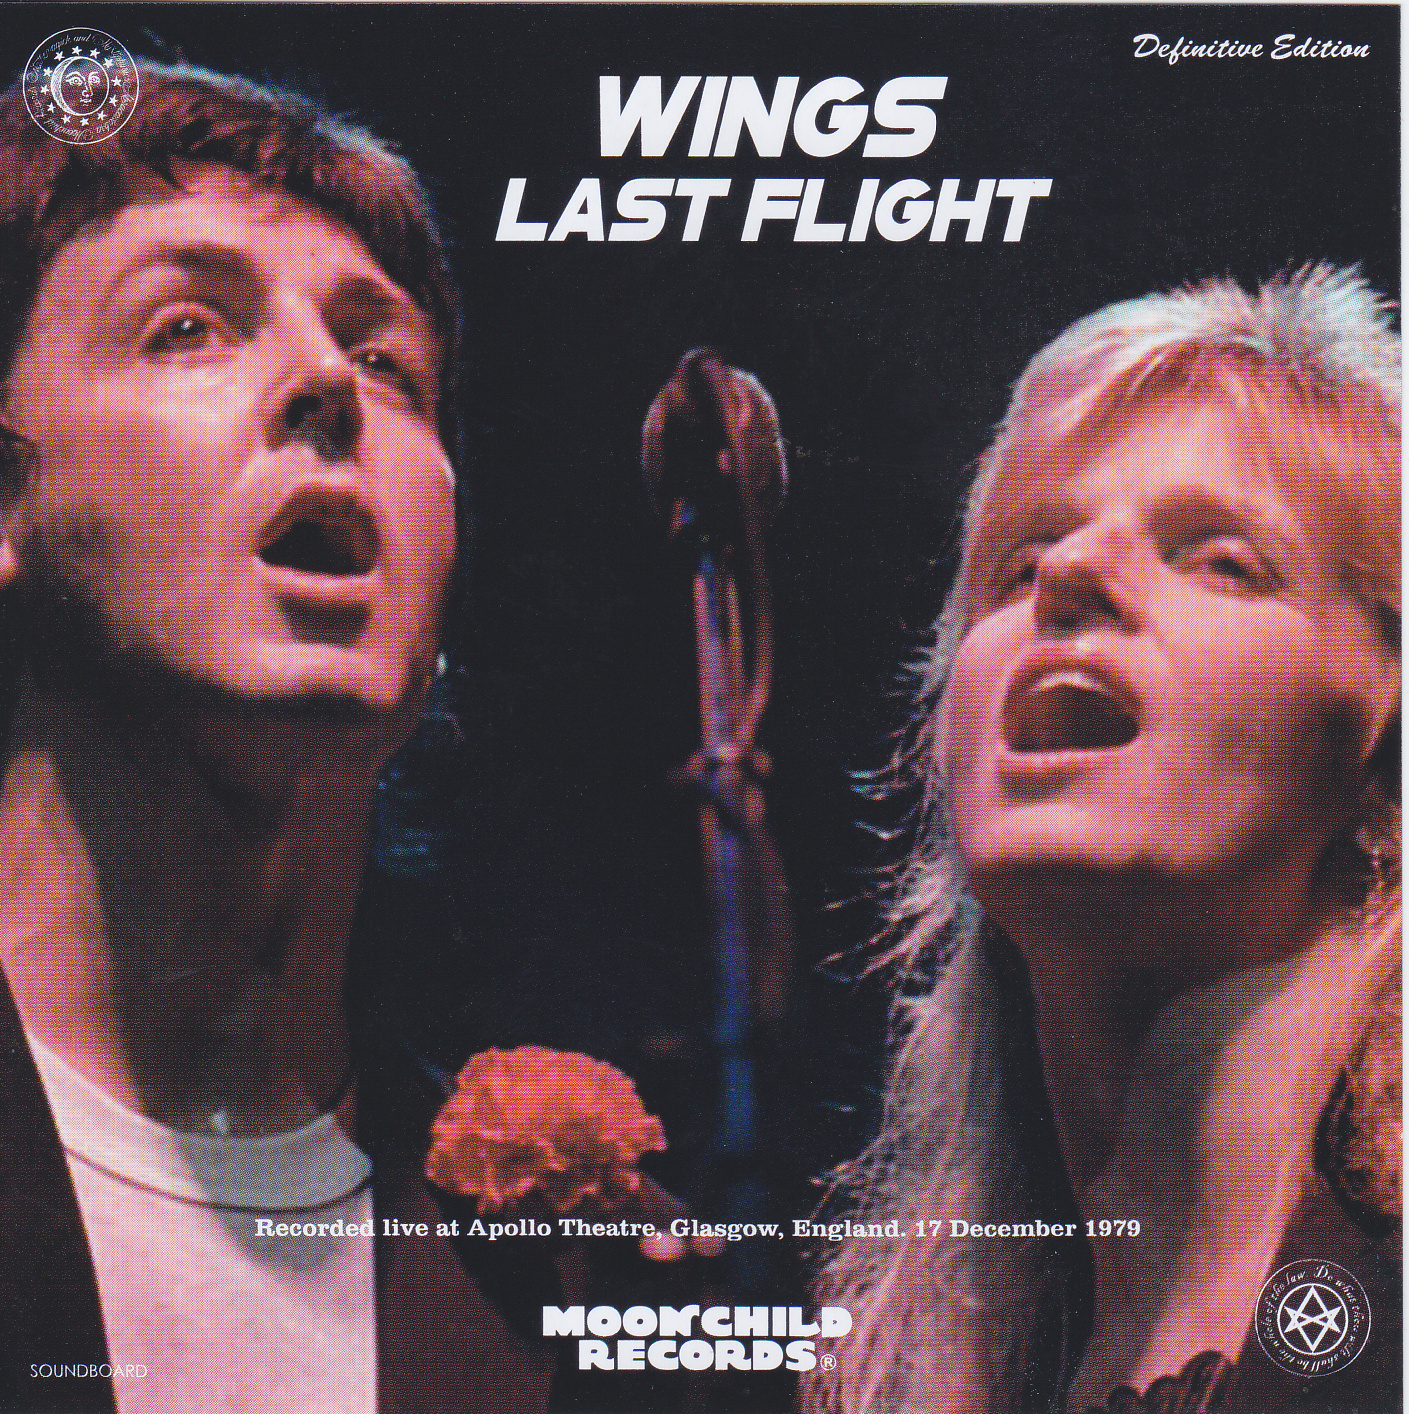 Paul McCartney & Wings / Last Flight Definitive Edition / 2CD 